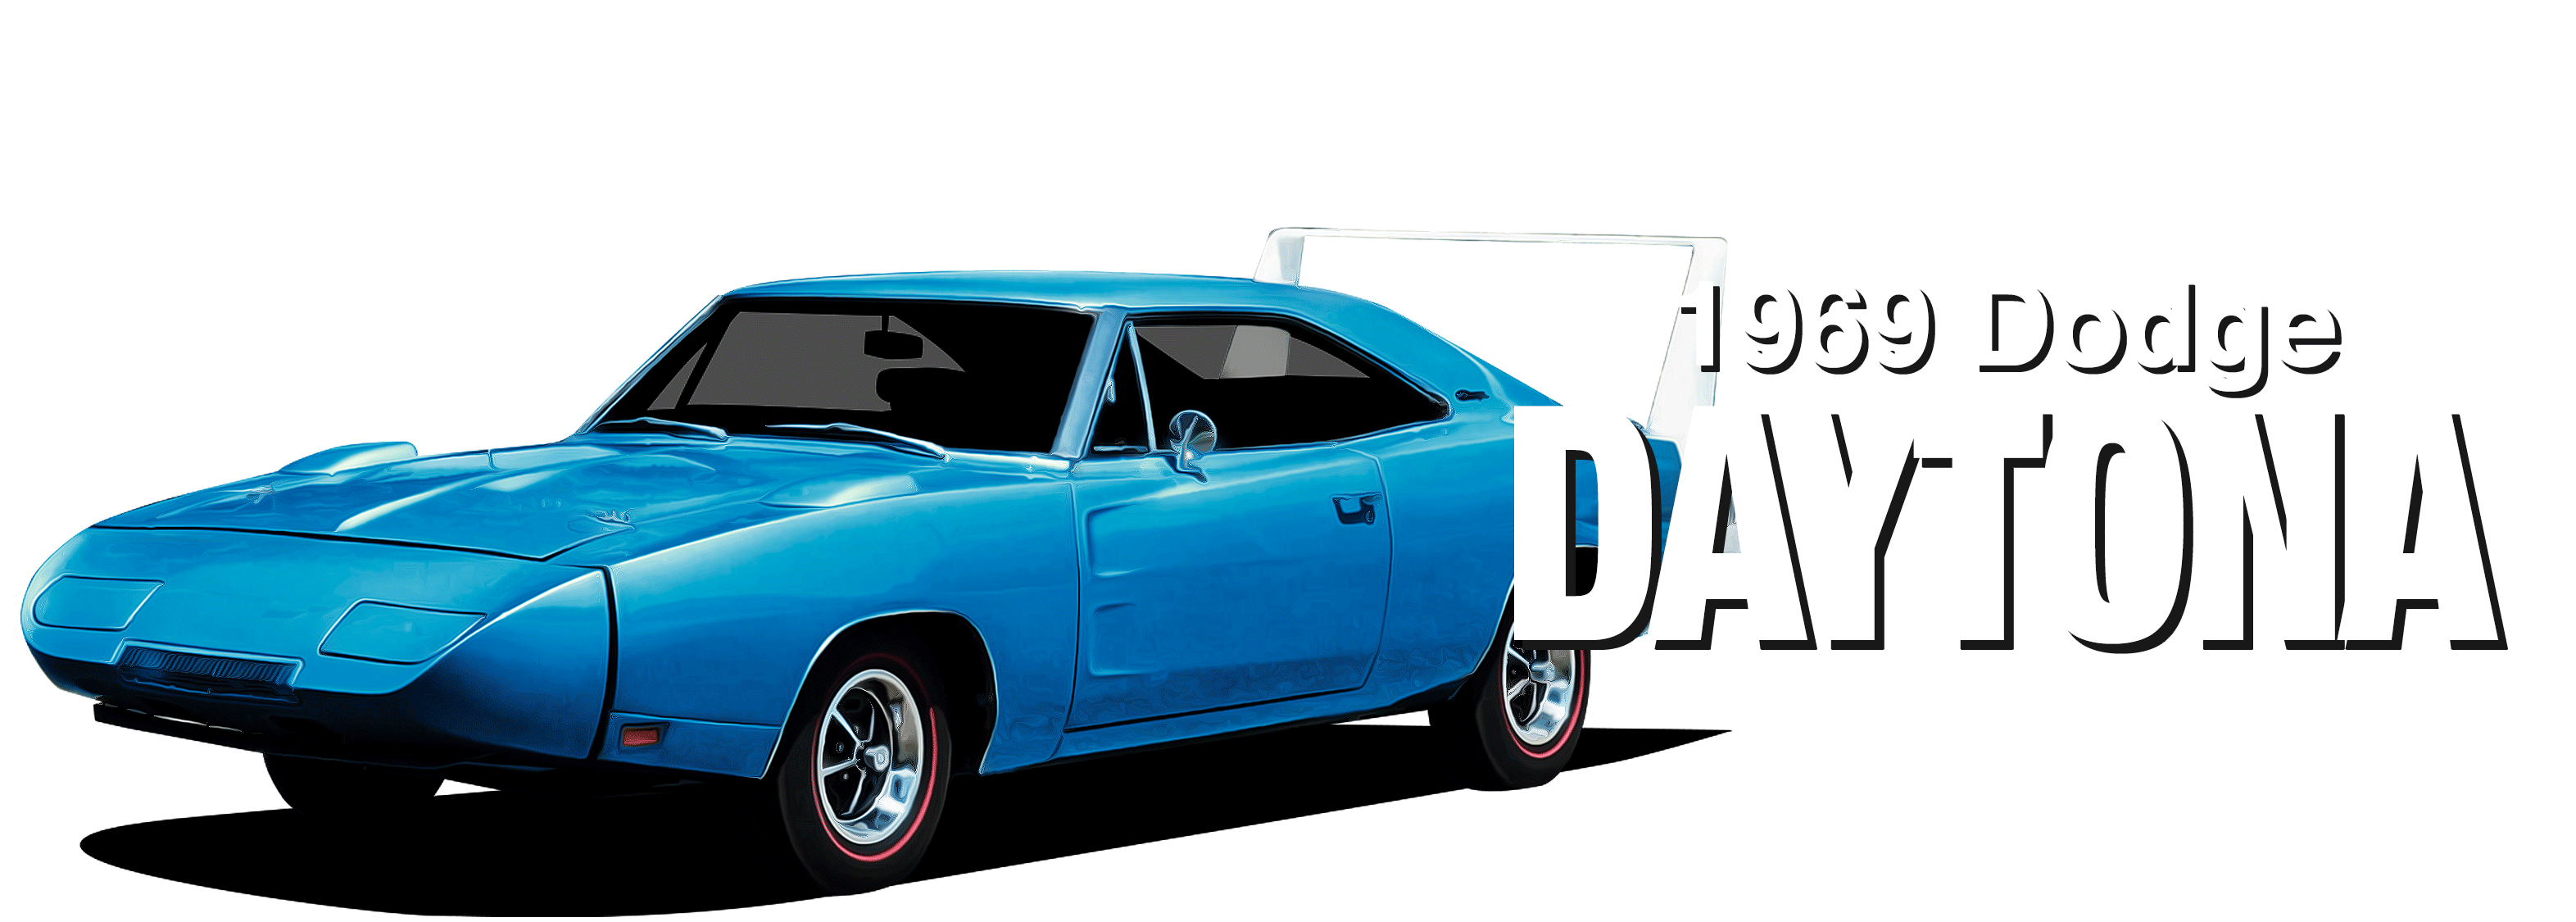 Dodge-Daytona-vehicle-desktop_v2